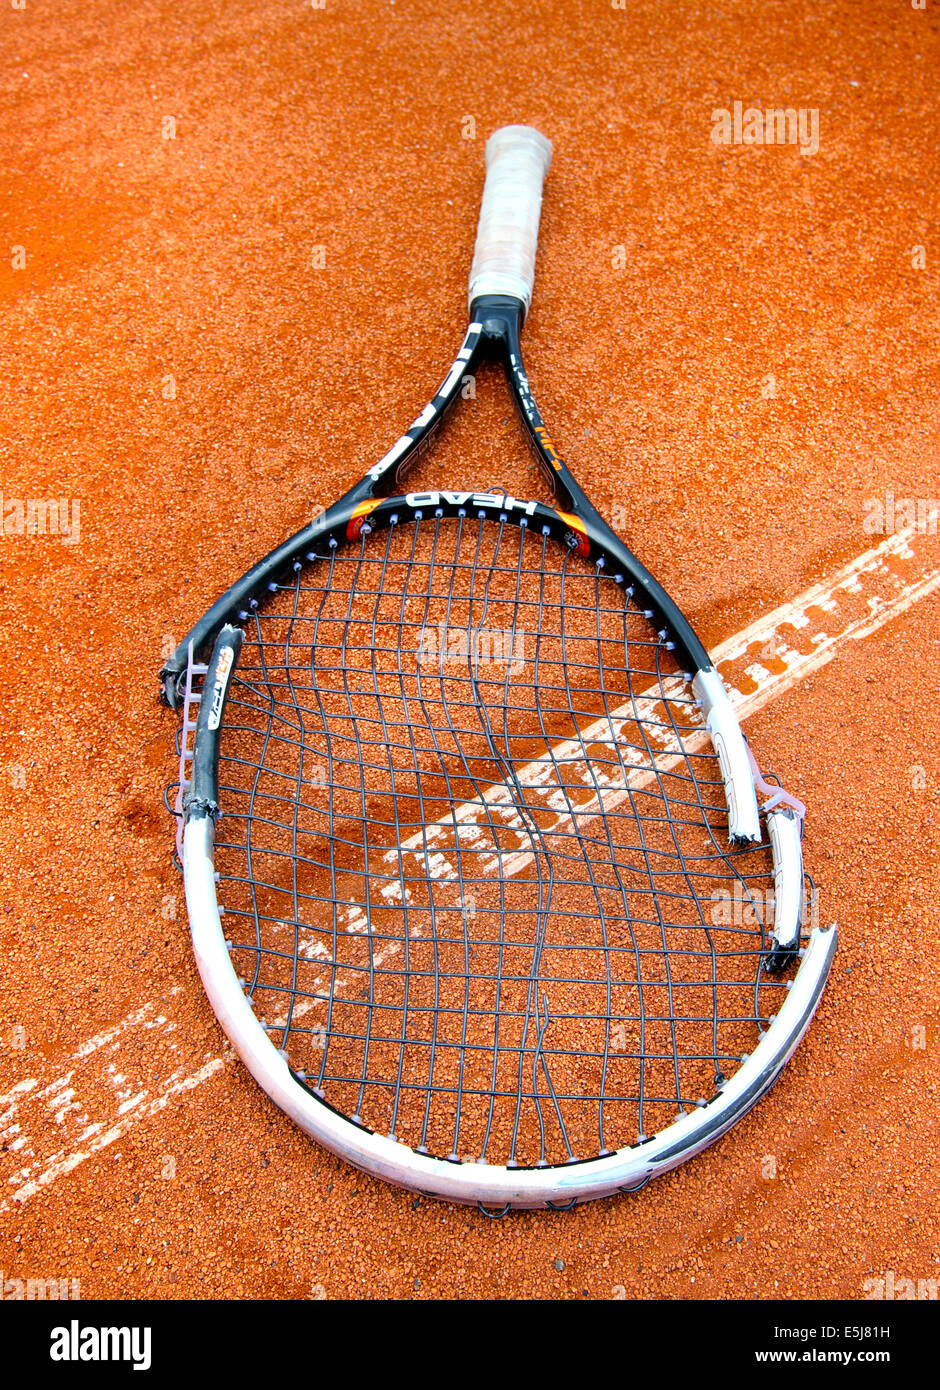 Raquette de Tennis cassée Photo Stock - Alamy